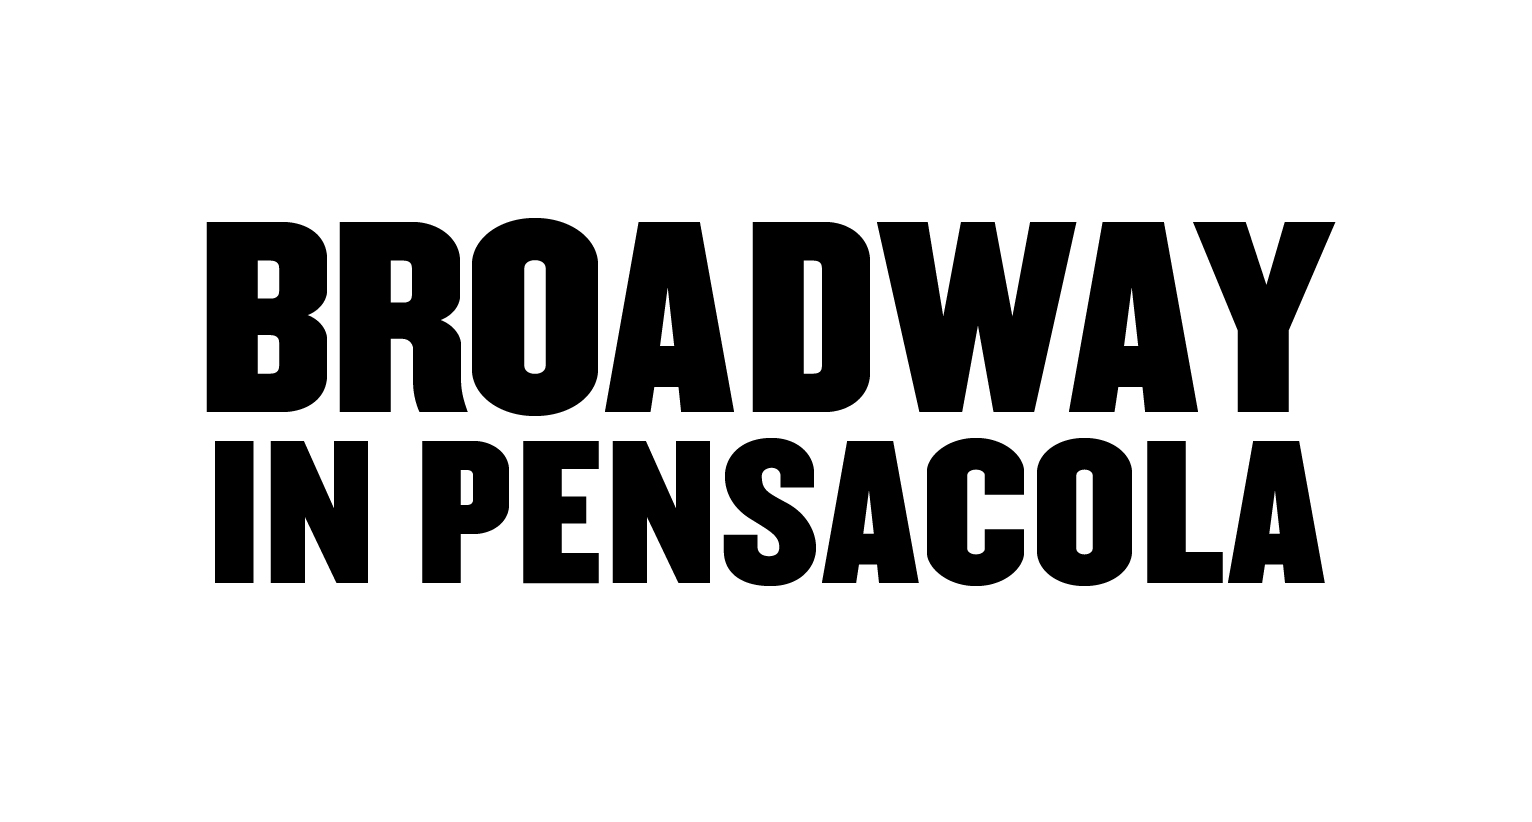 Broadway in Pensacola